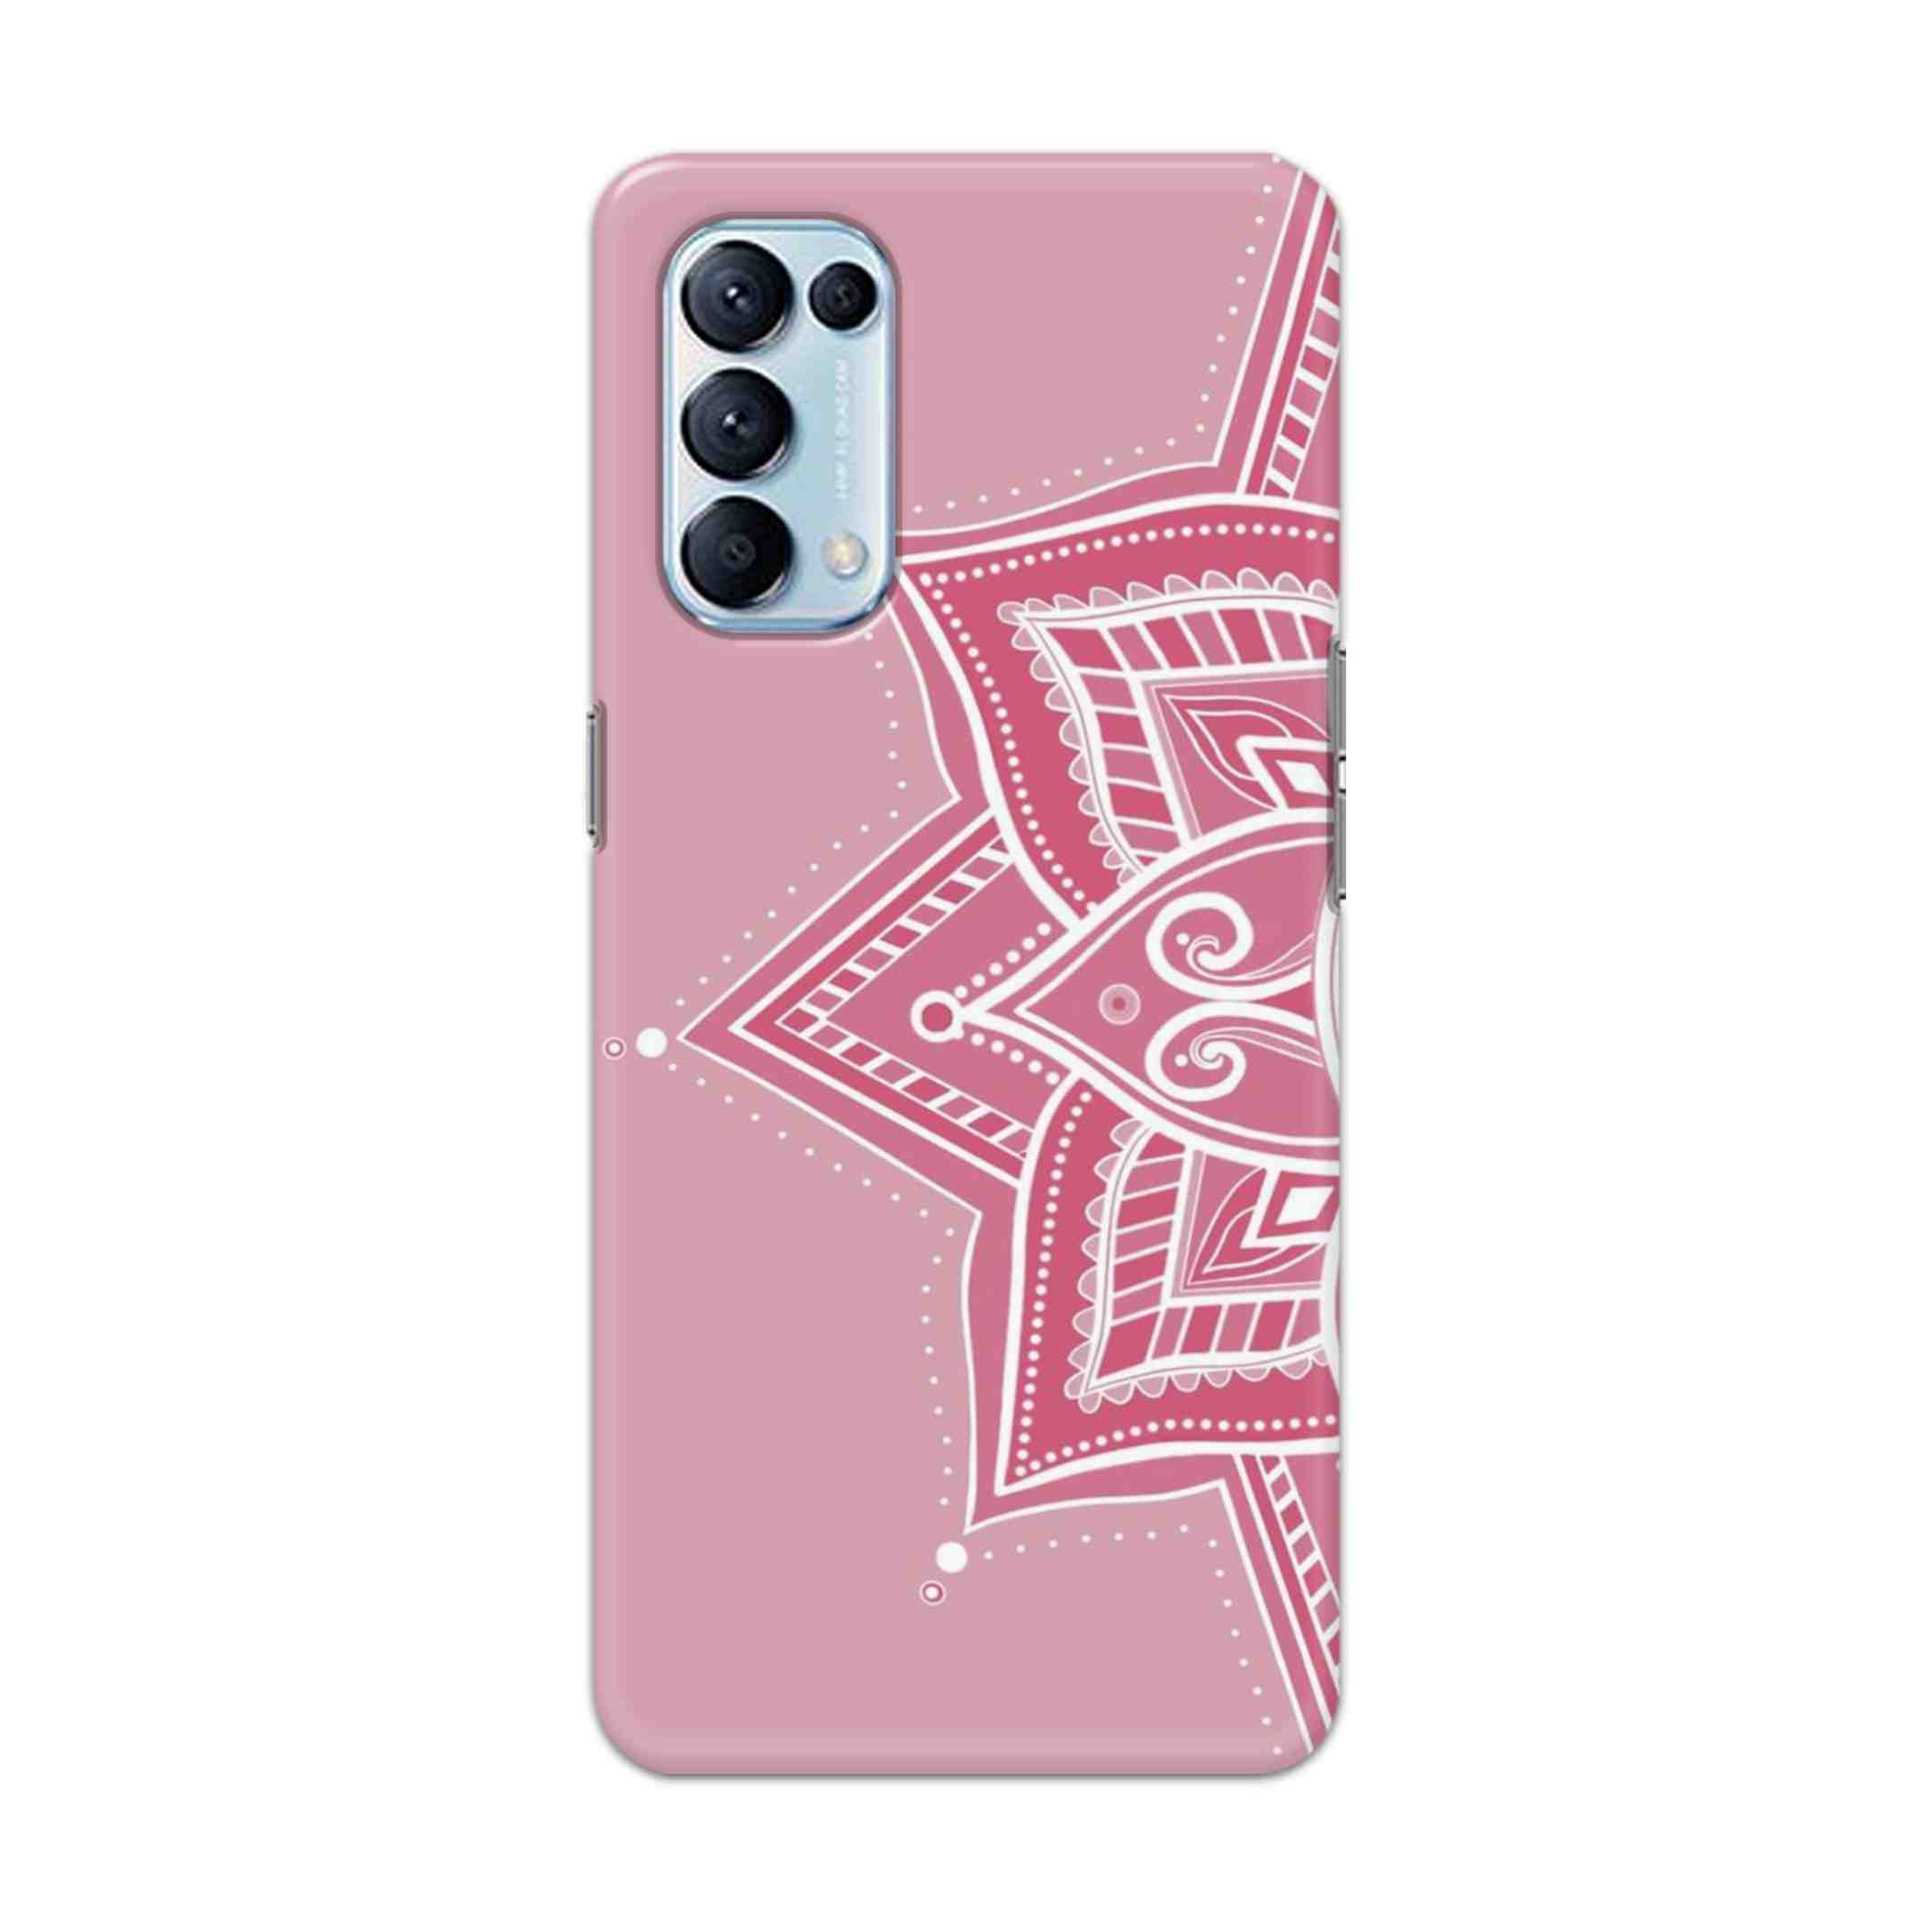 Buy Pink Rangoli Hard Back Mobile Phone Case Cover For Oppo Reno 5 Pro 5G Online